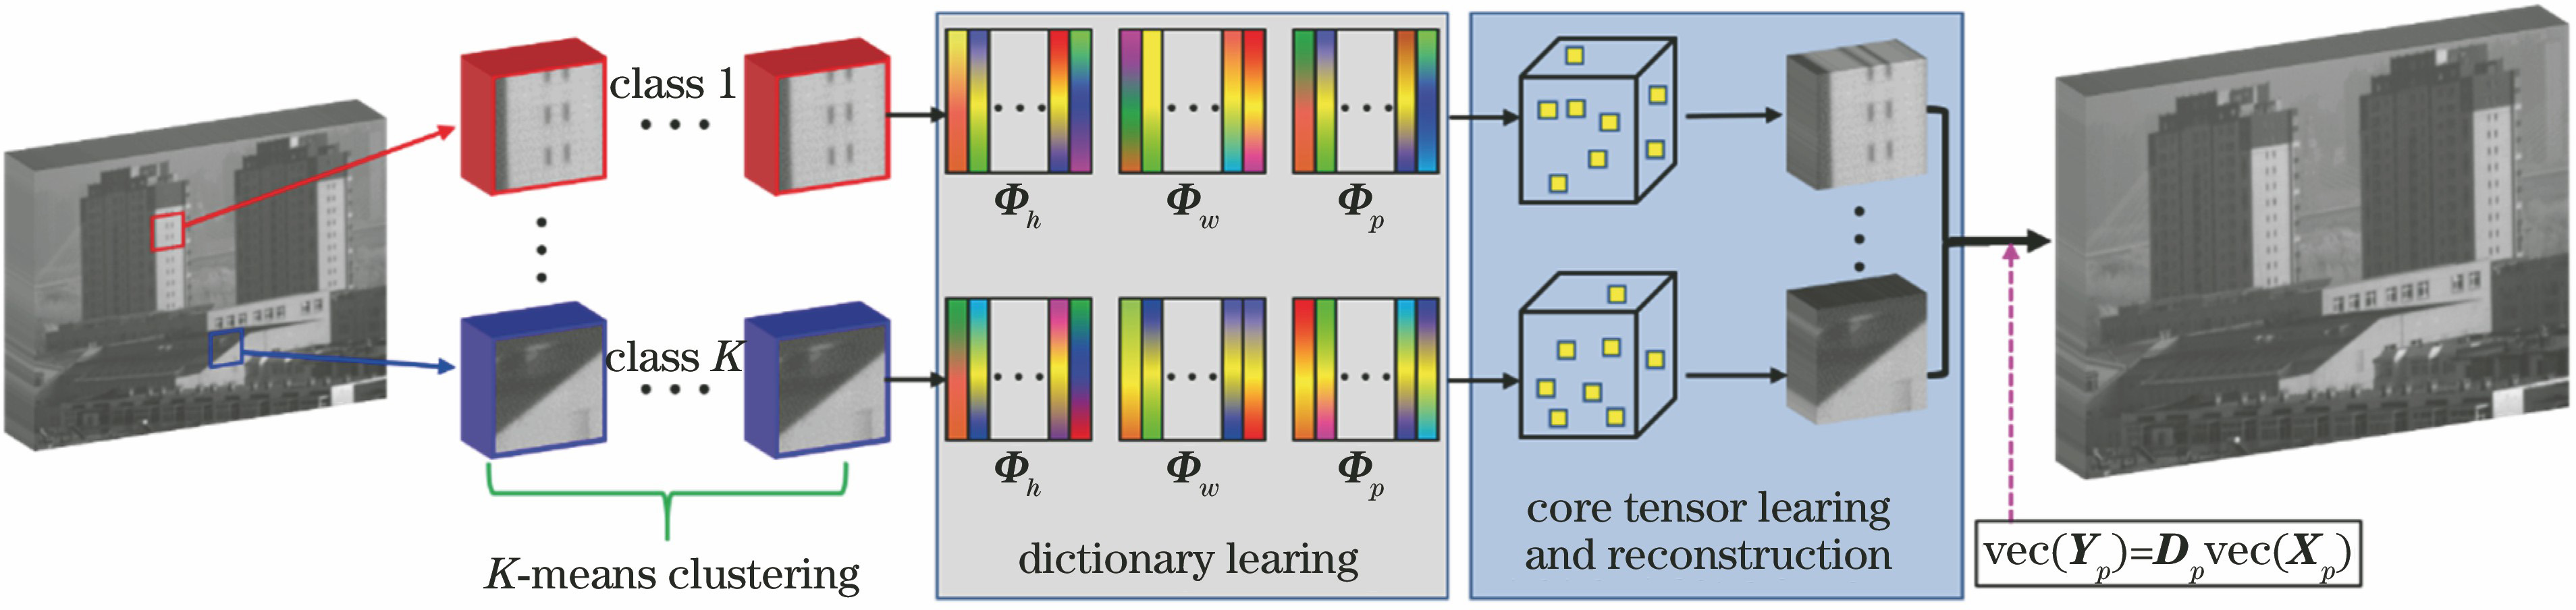 Micropolarization system and polarization tensor data structure. (a) Arrangement pattern of micropolarizer; (b) schematic of tensor decomposition of polarization data